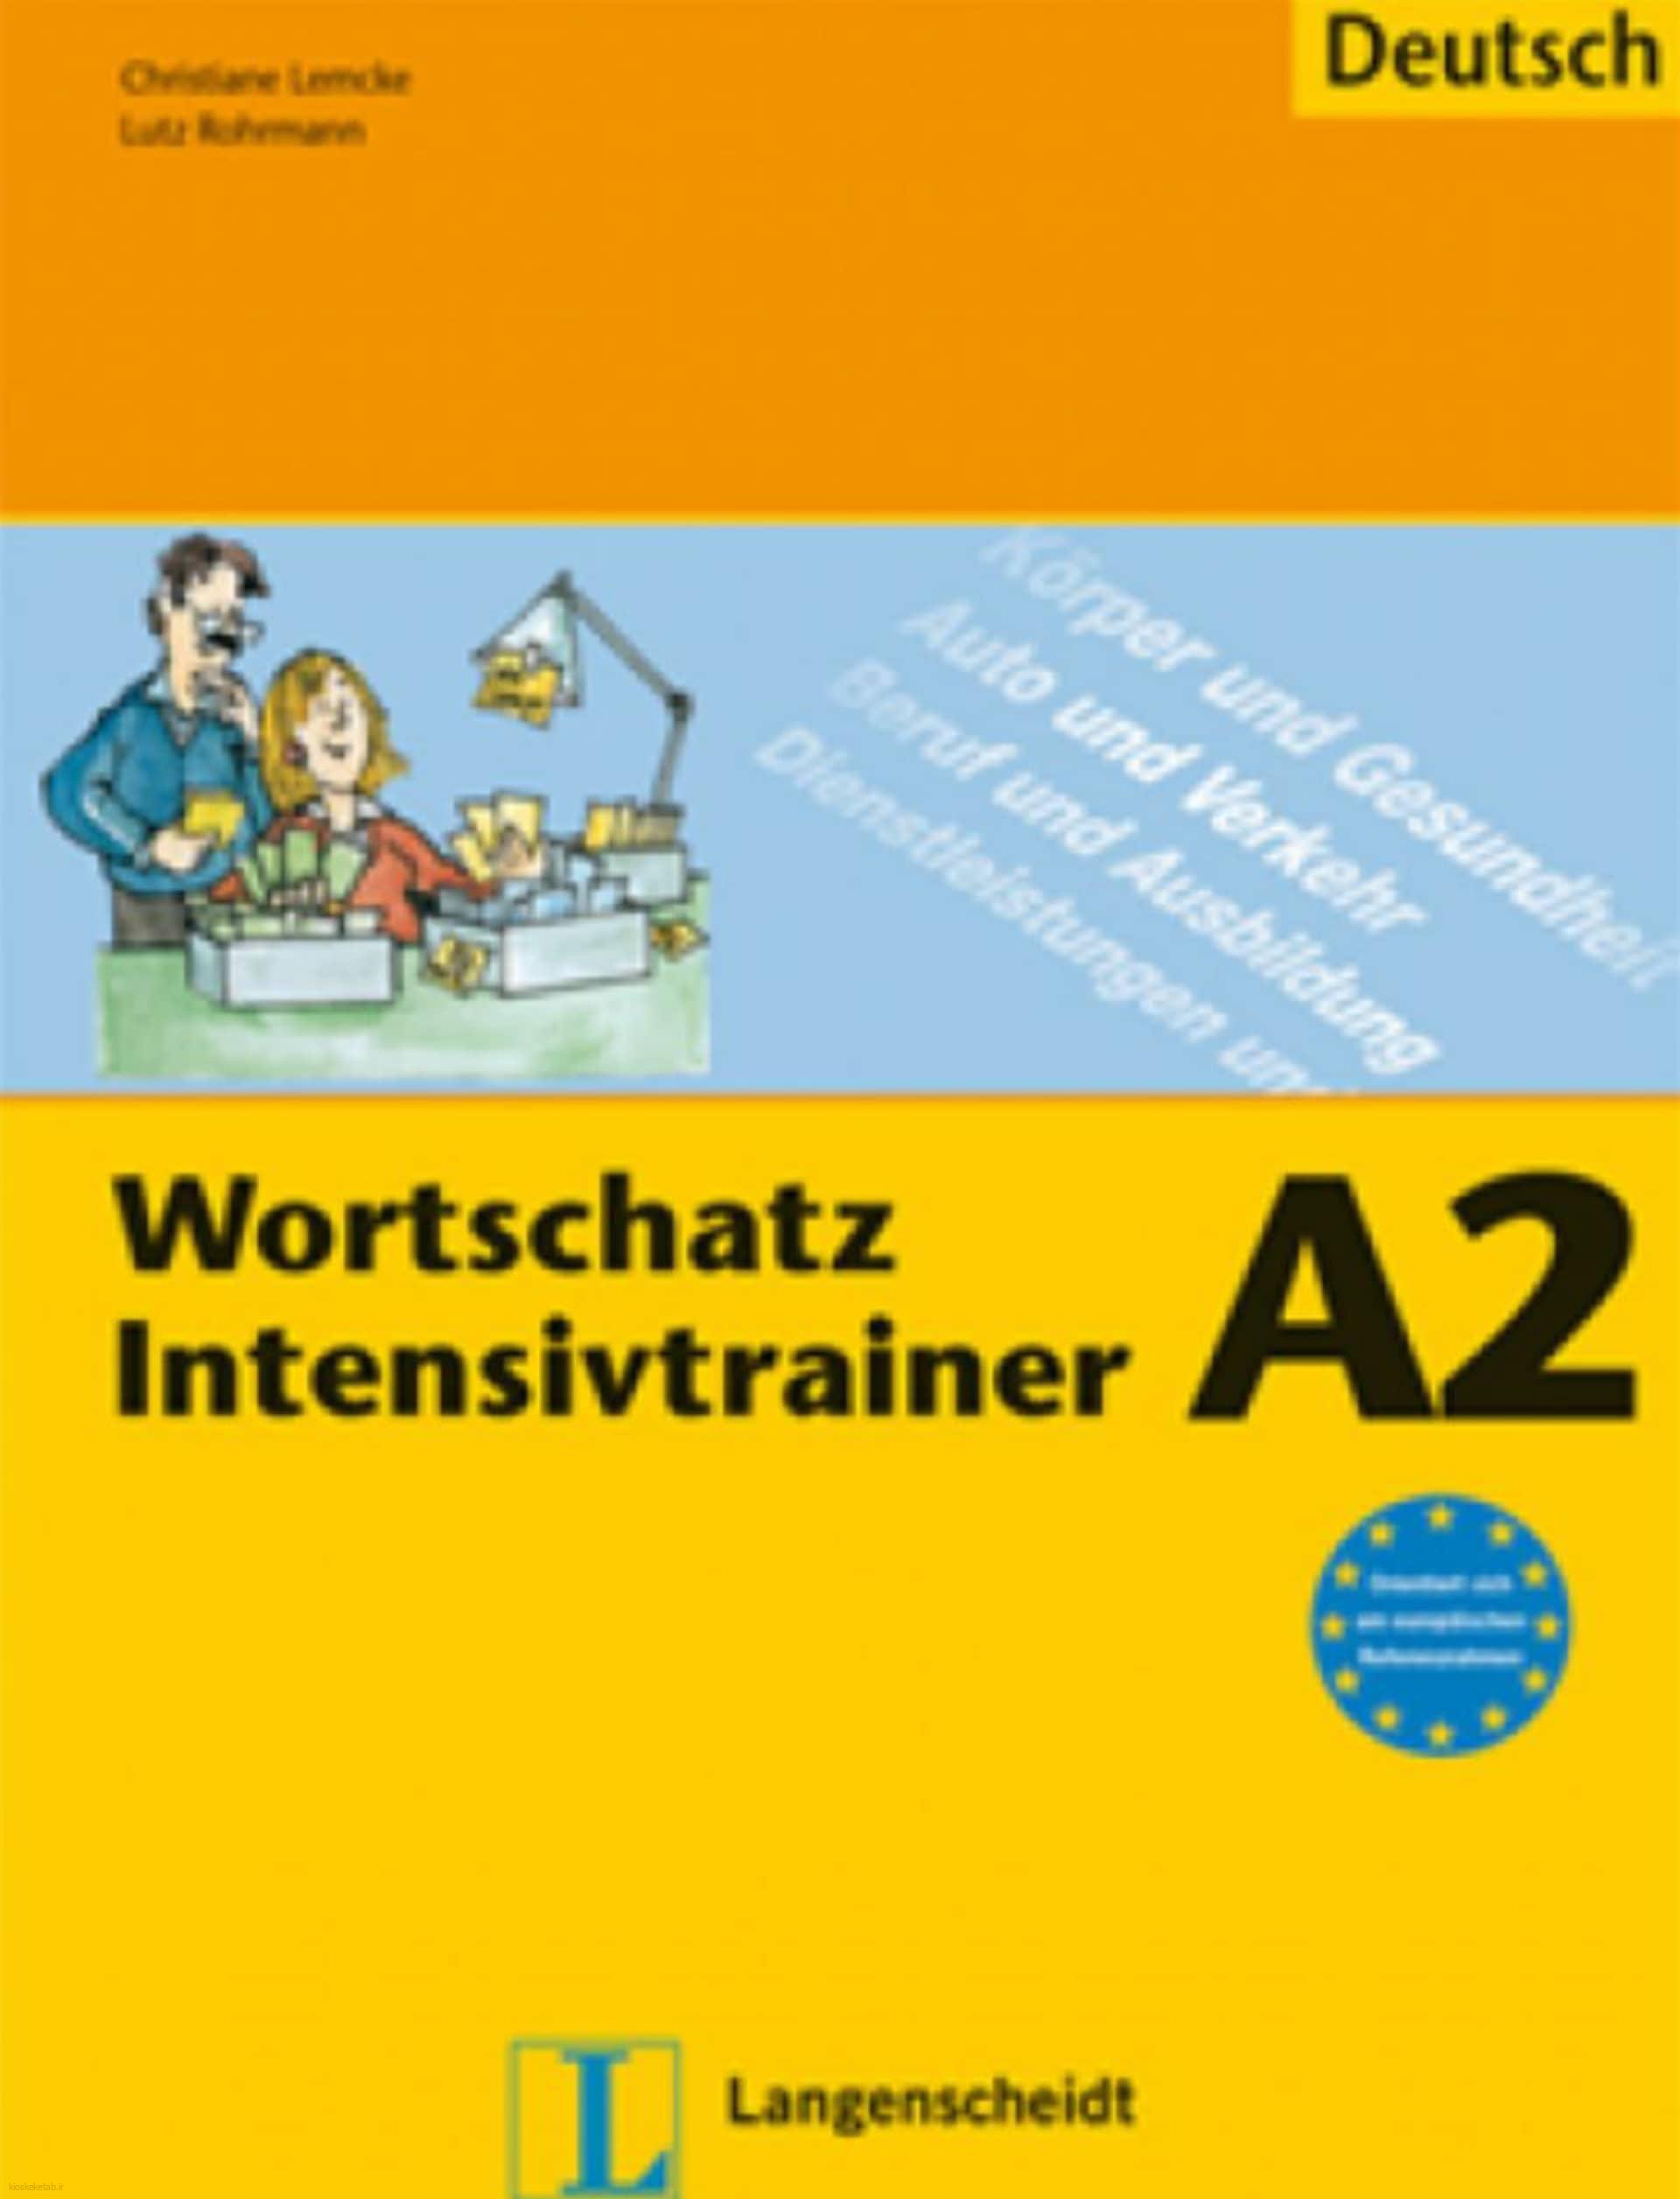 دانلود کتاب آلمانیWortschatz Intensivtrainer A2 A2